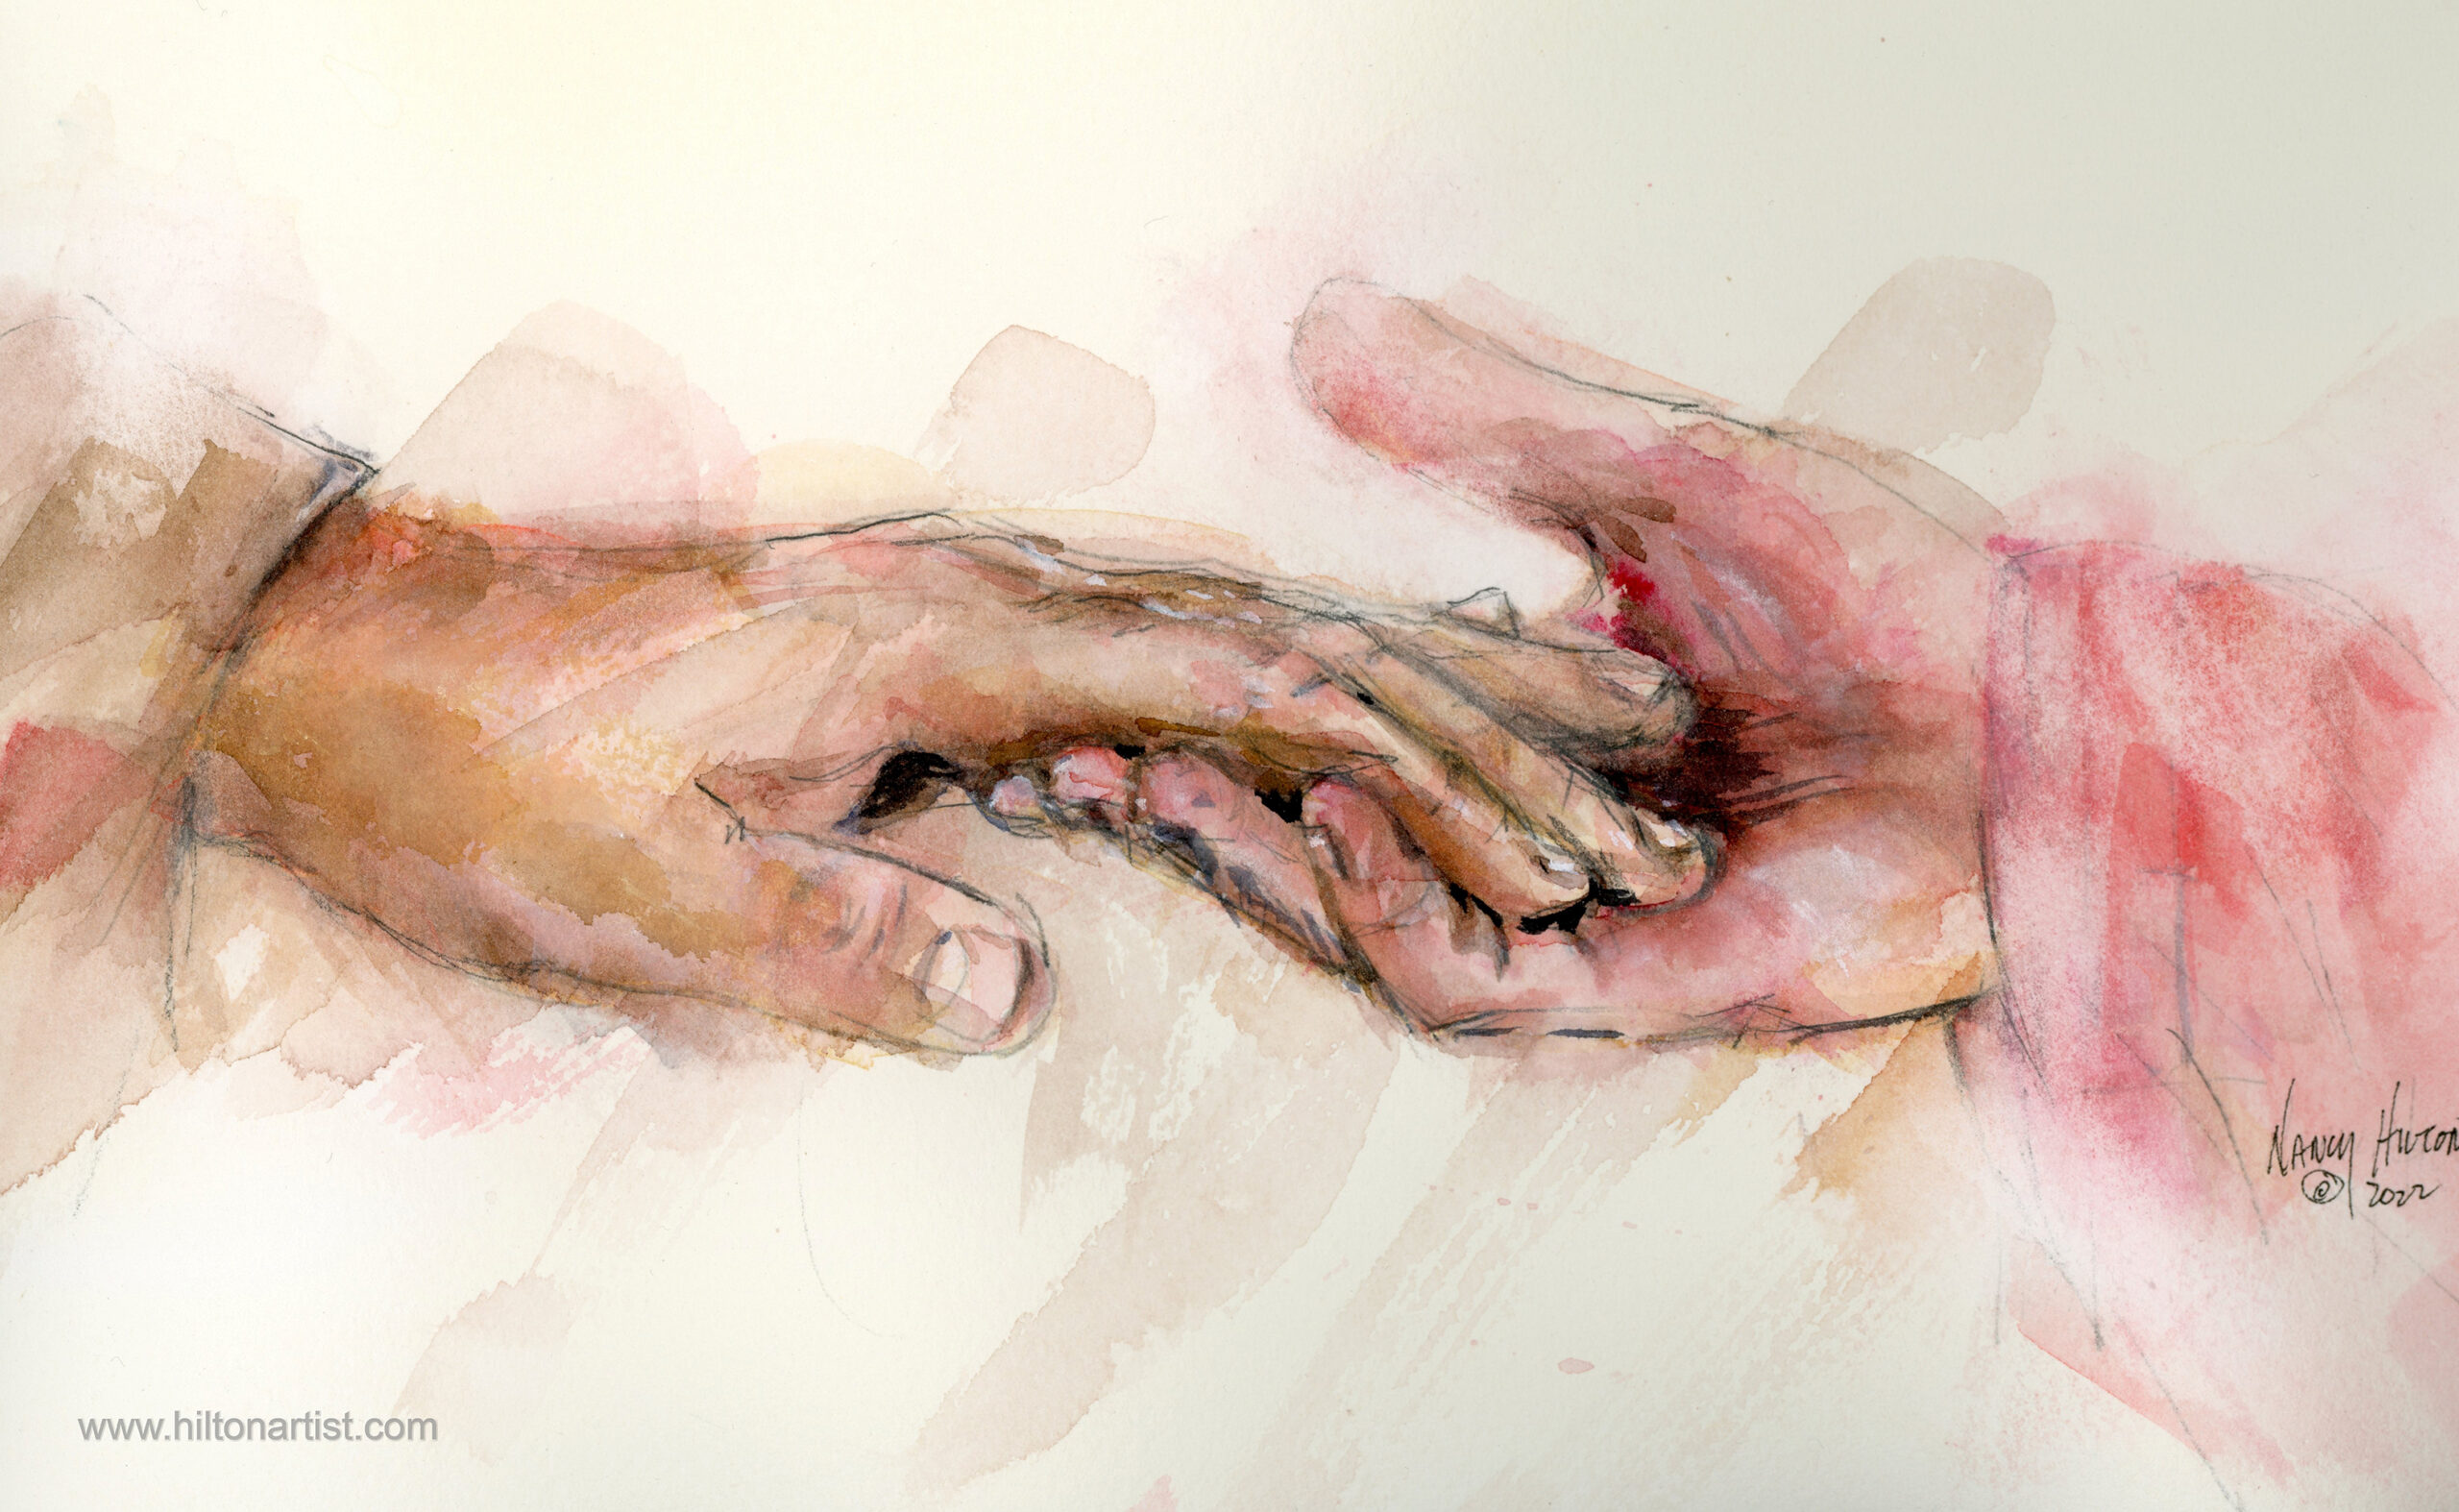 Touching the hand of Jesus